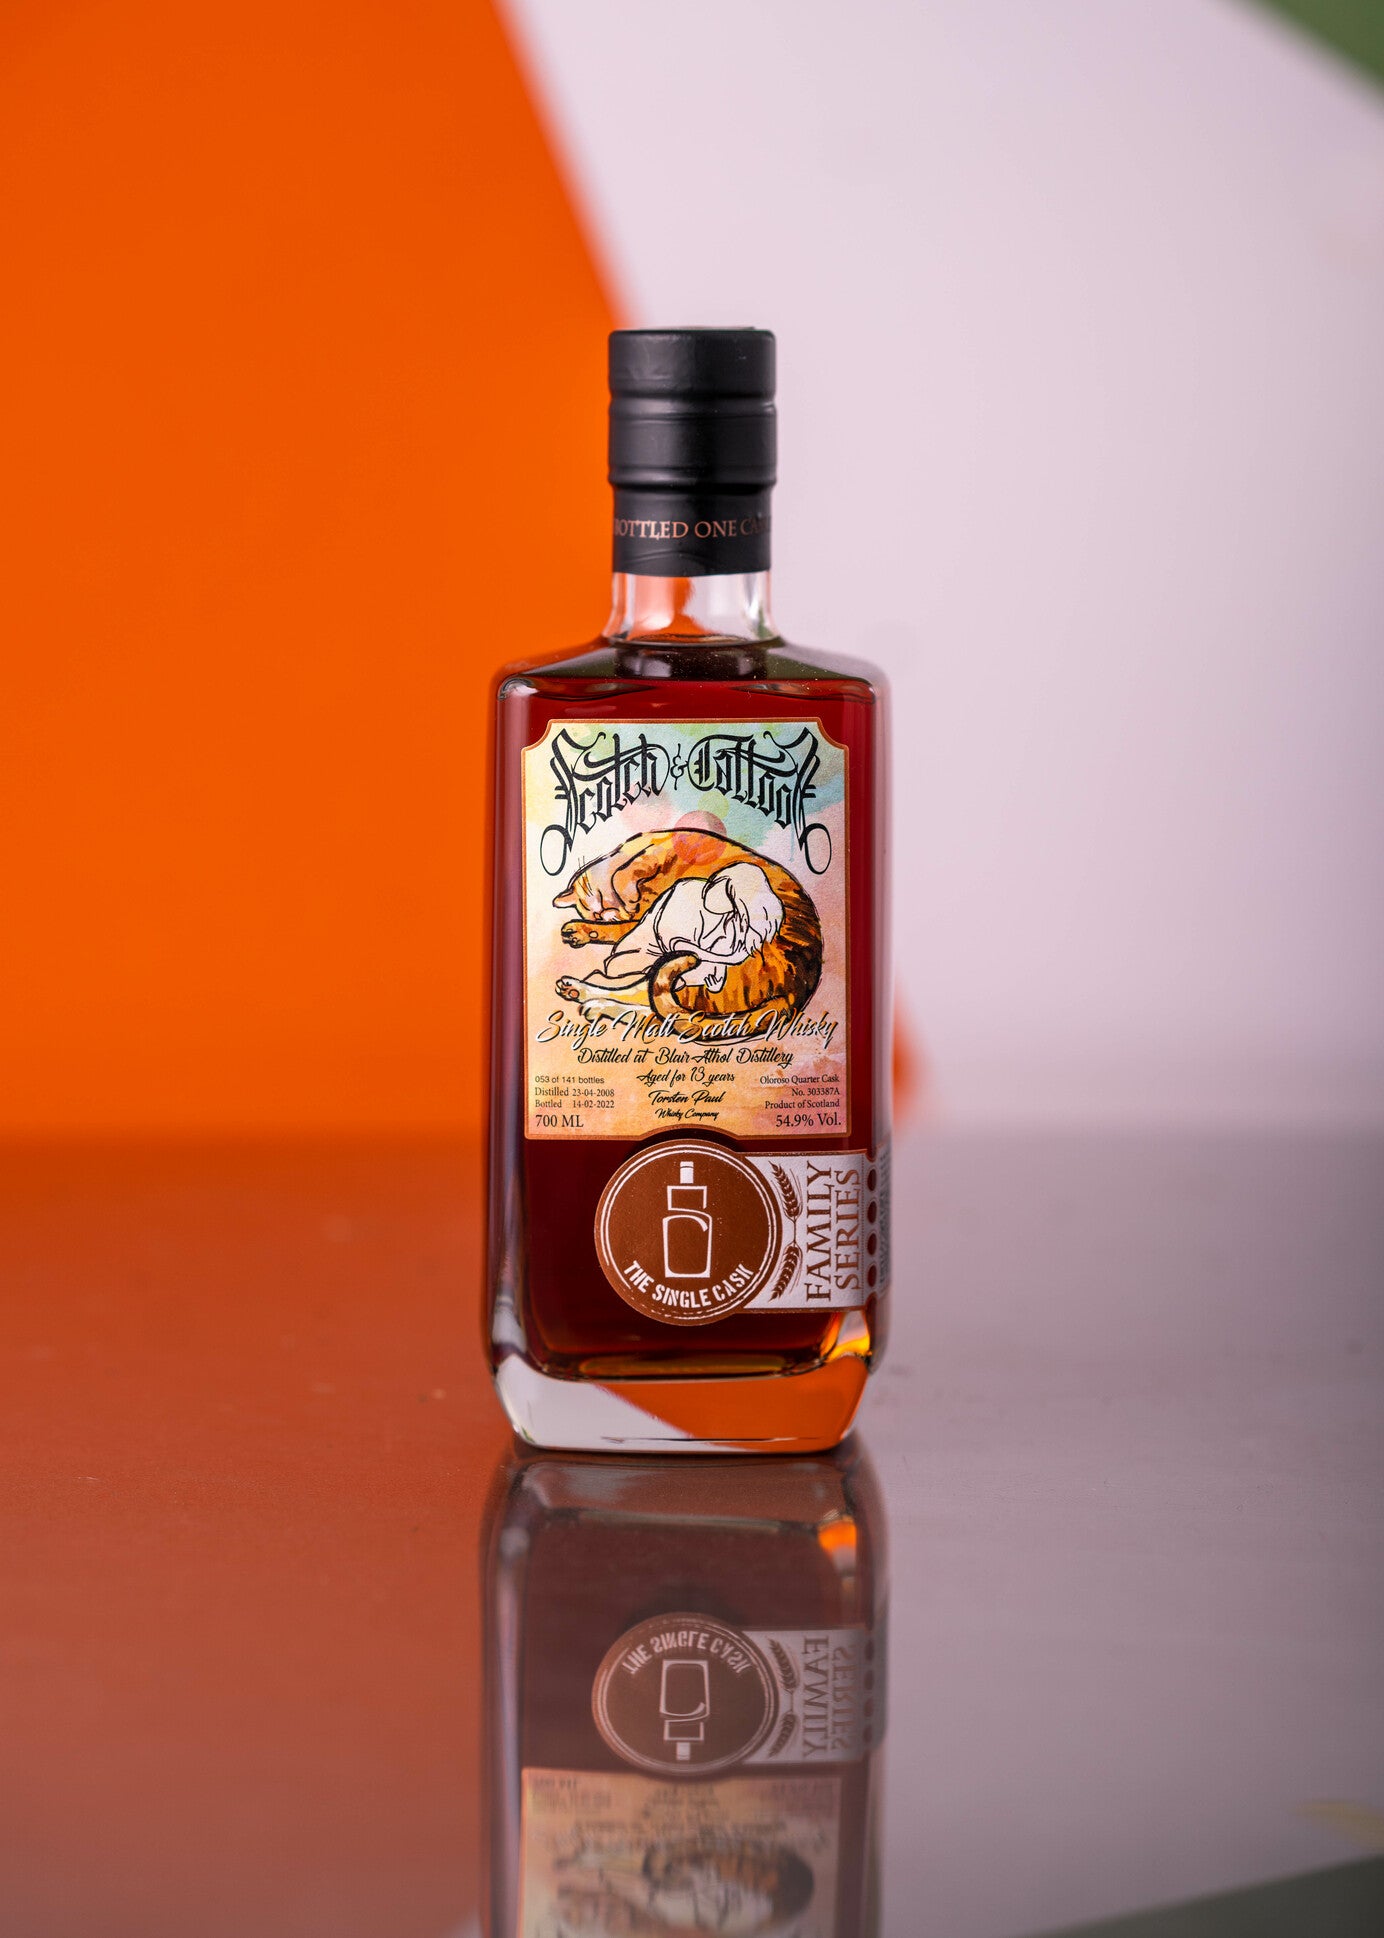 Blair Athol single cask scotch whisky from Scotch and Tattoos